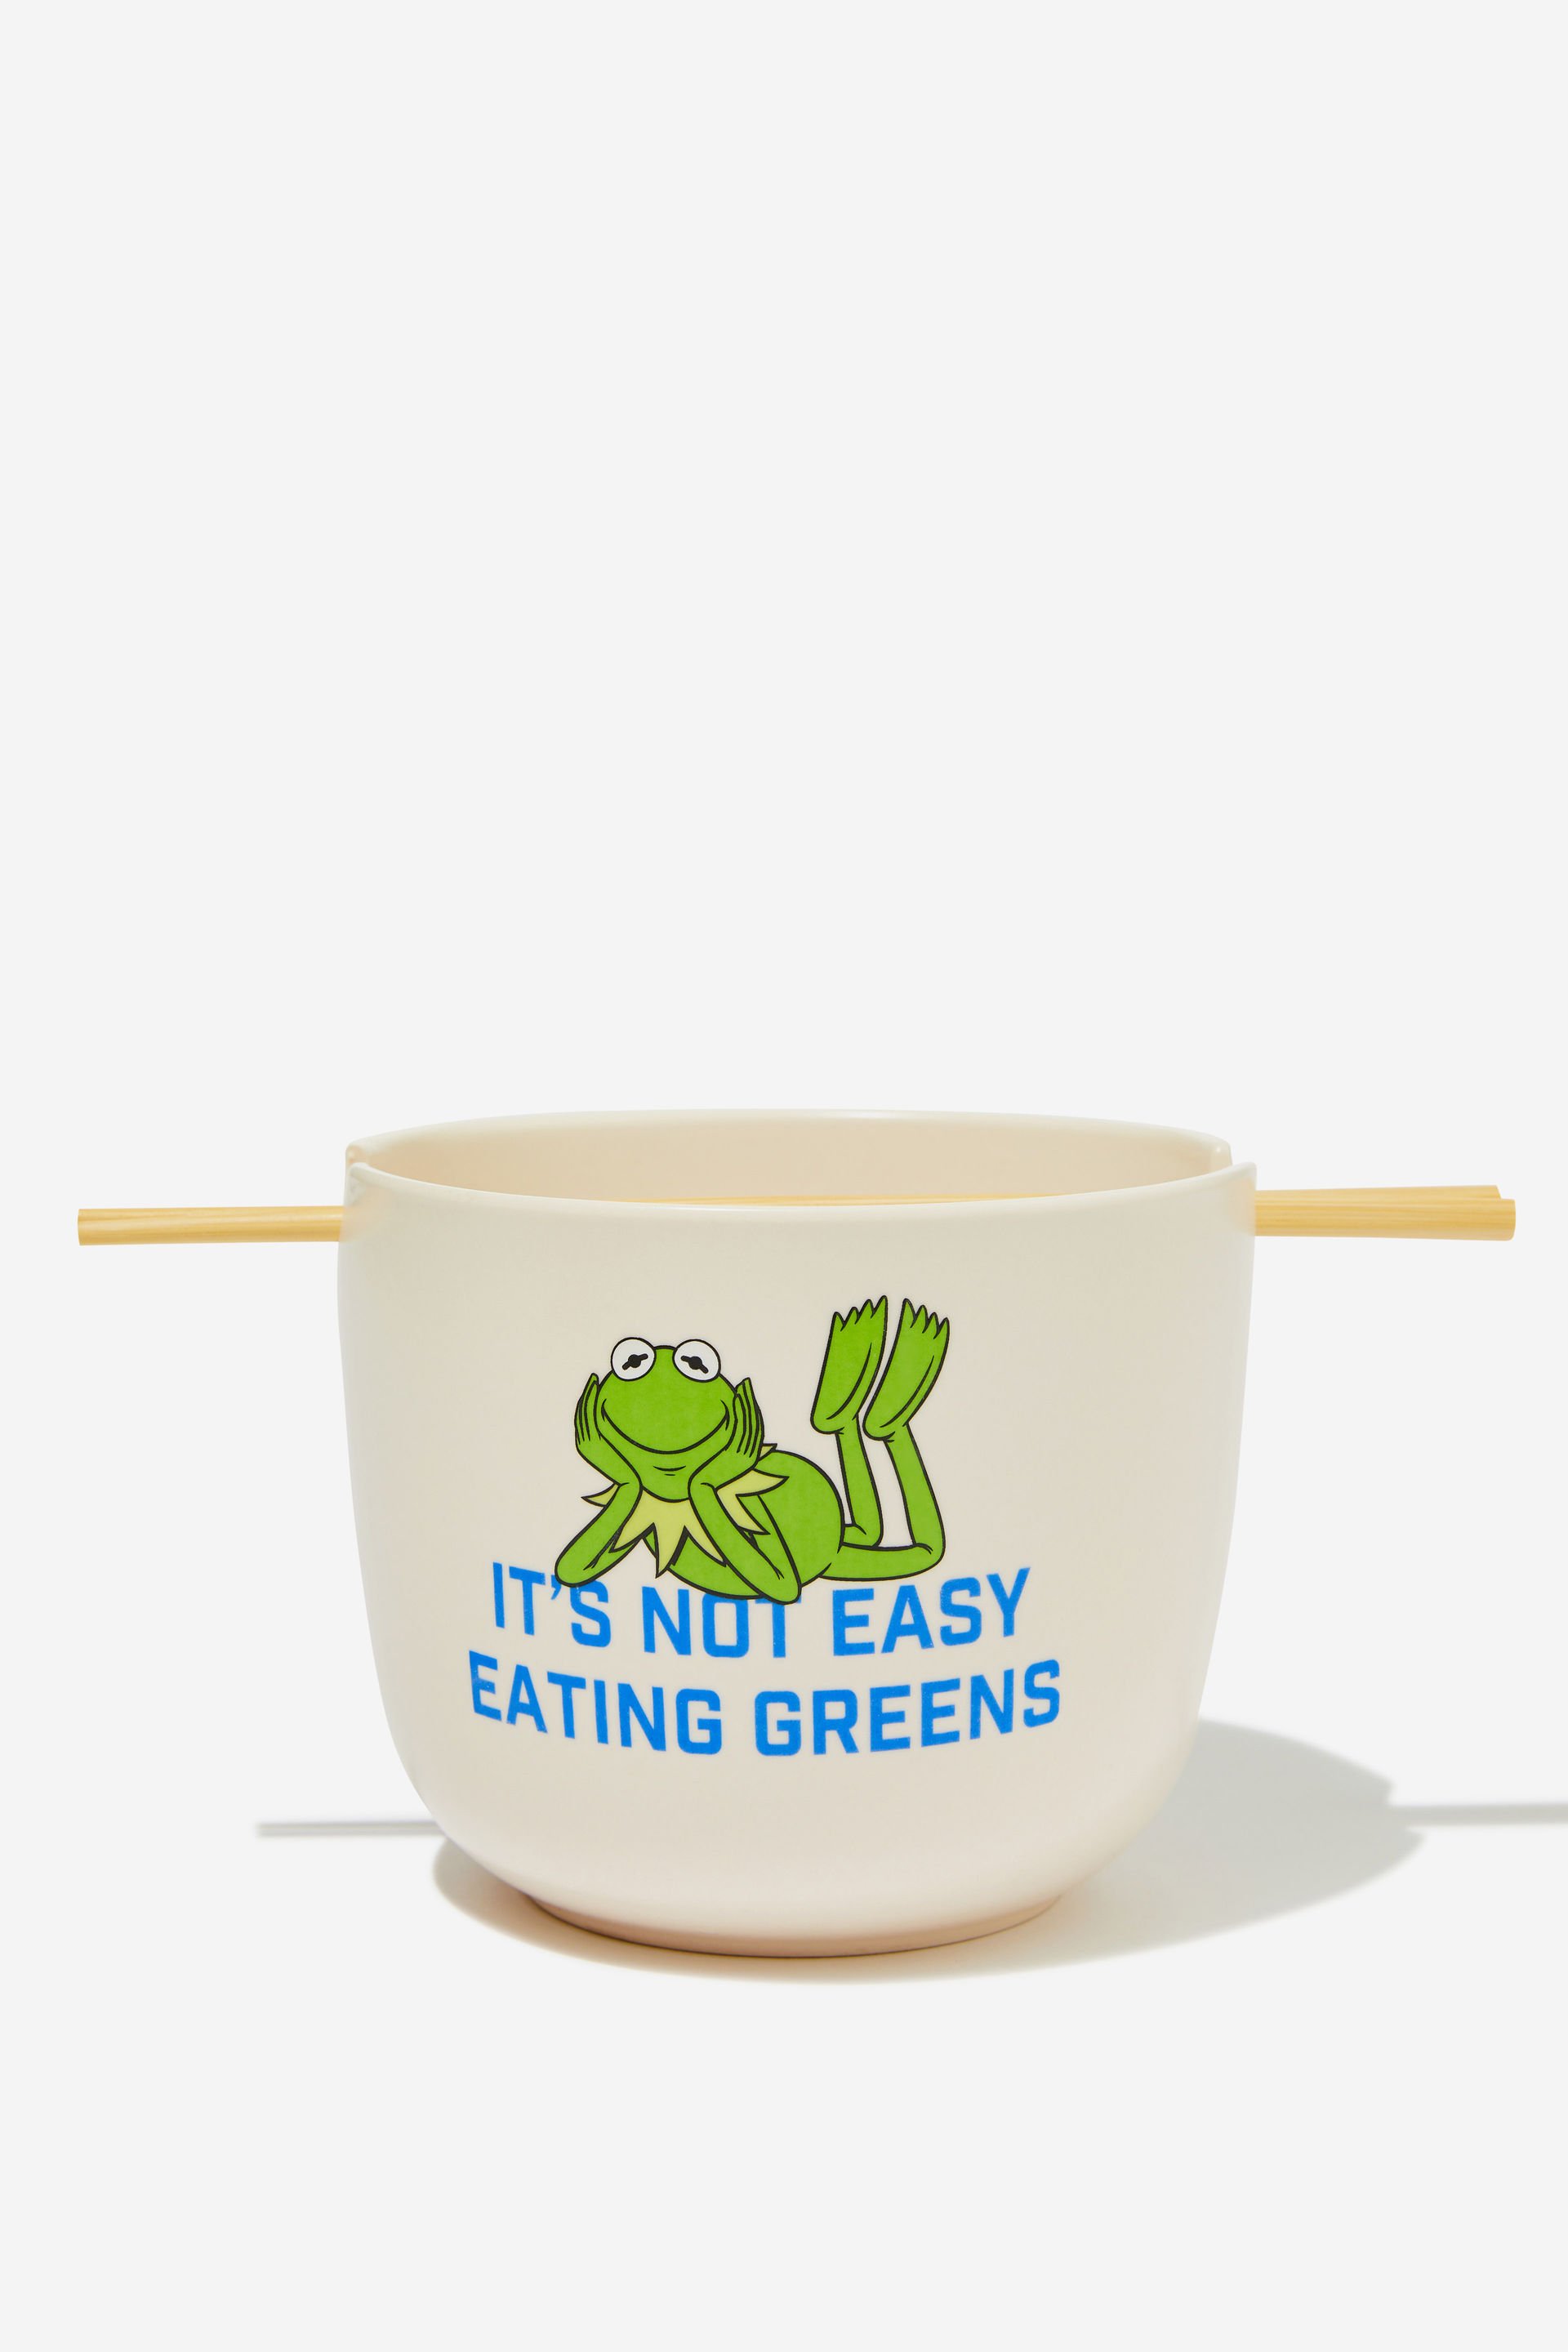 Typo - Kermit x Feed Me Bowl - Lcn dis kermit eating greens